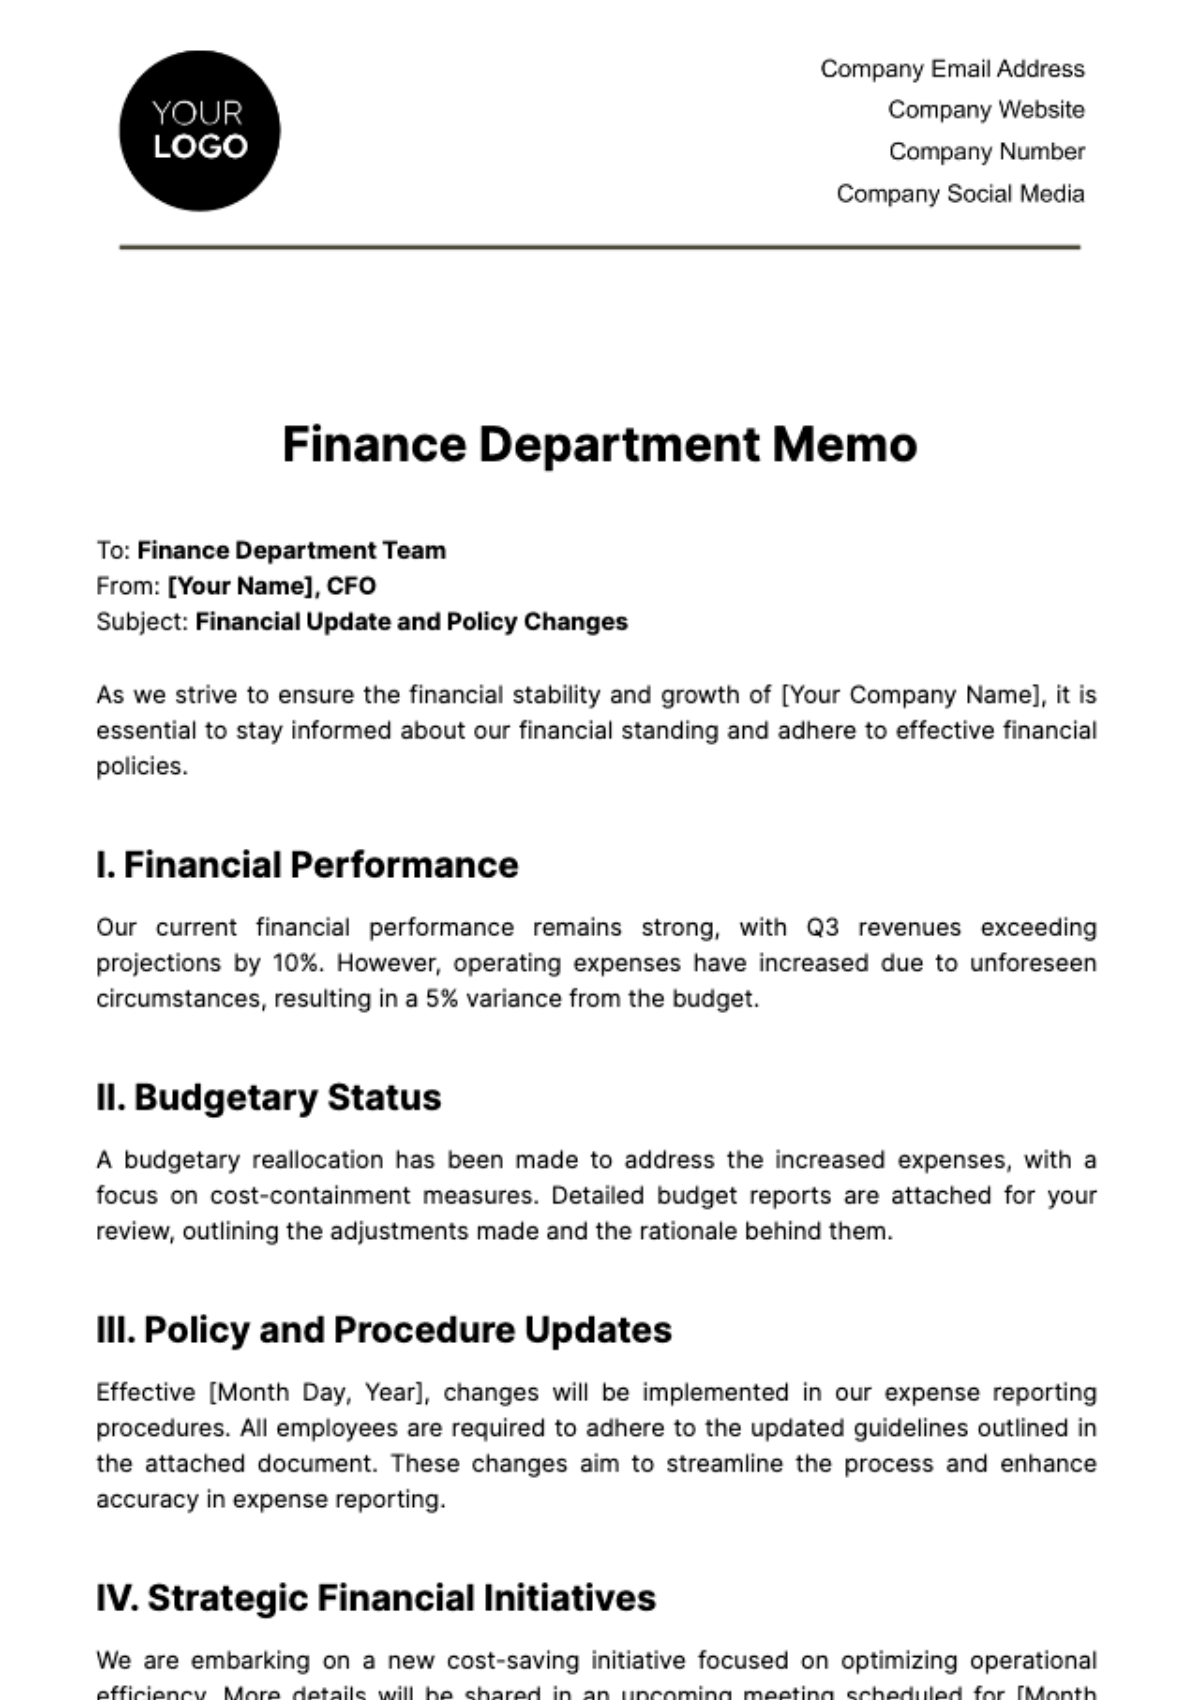 Finance Department Memo Template